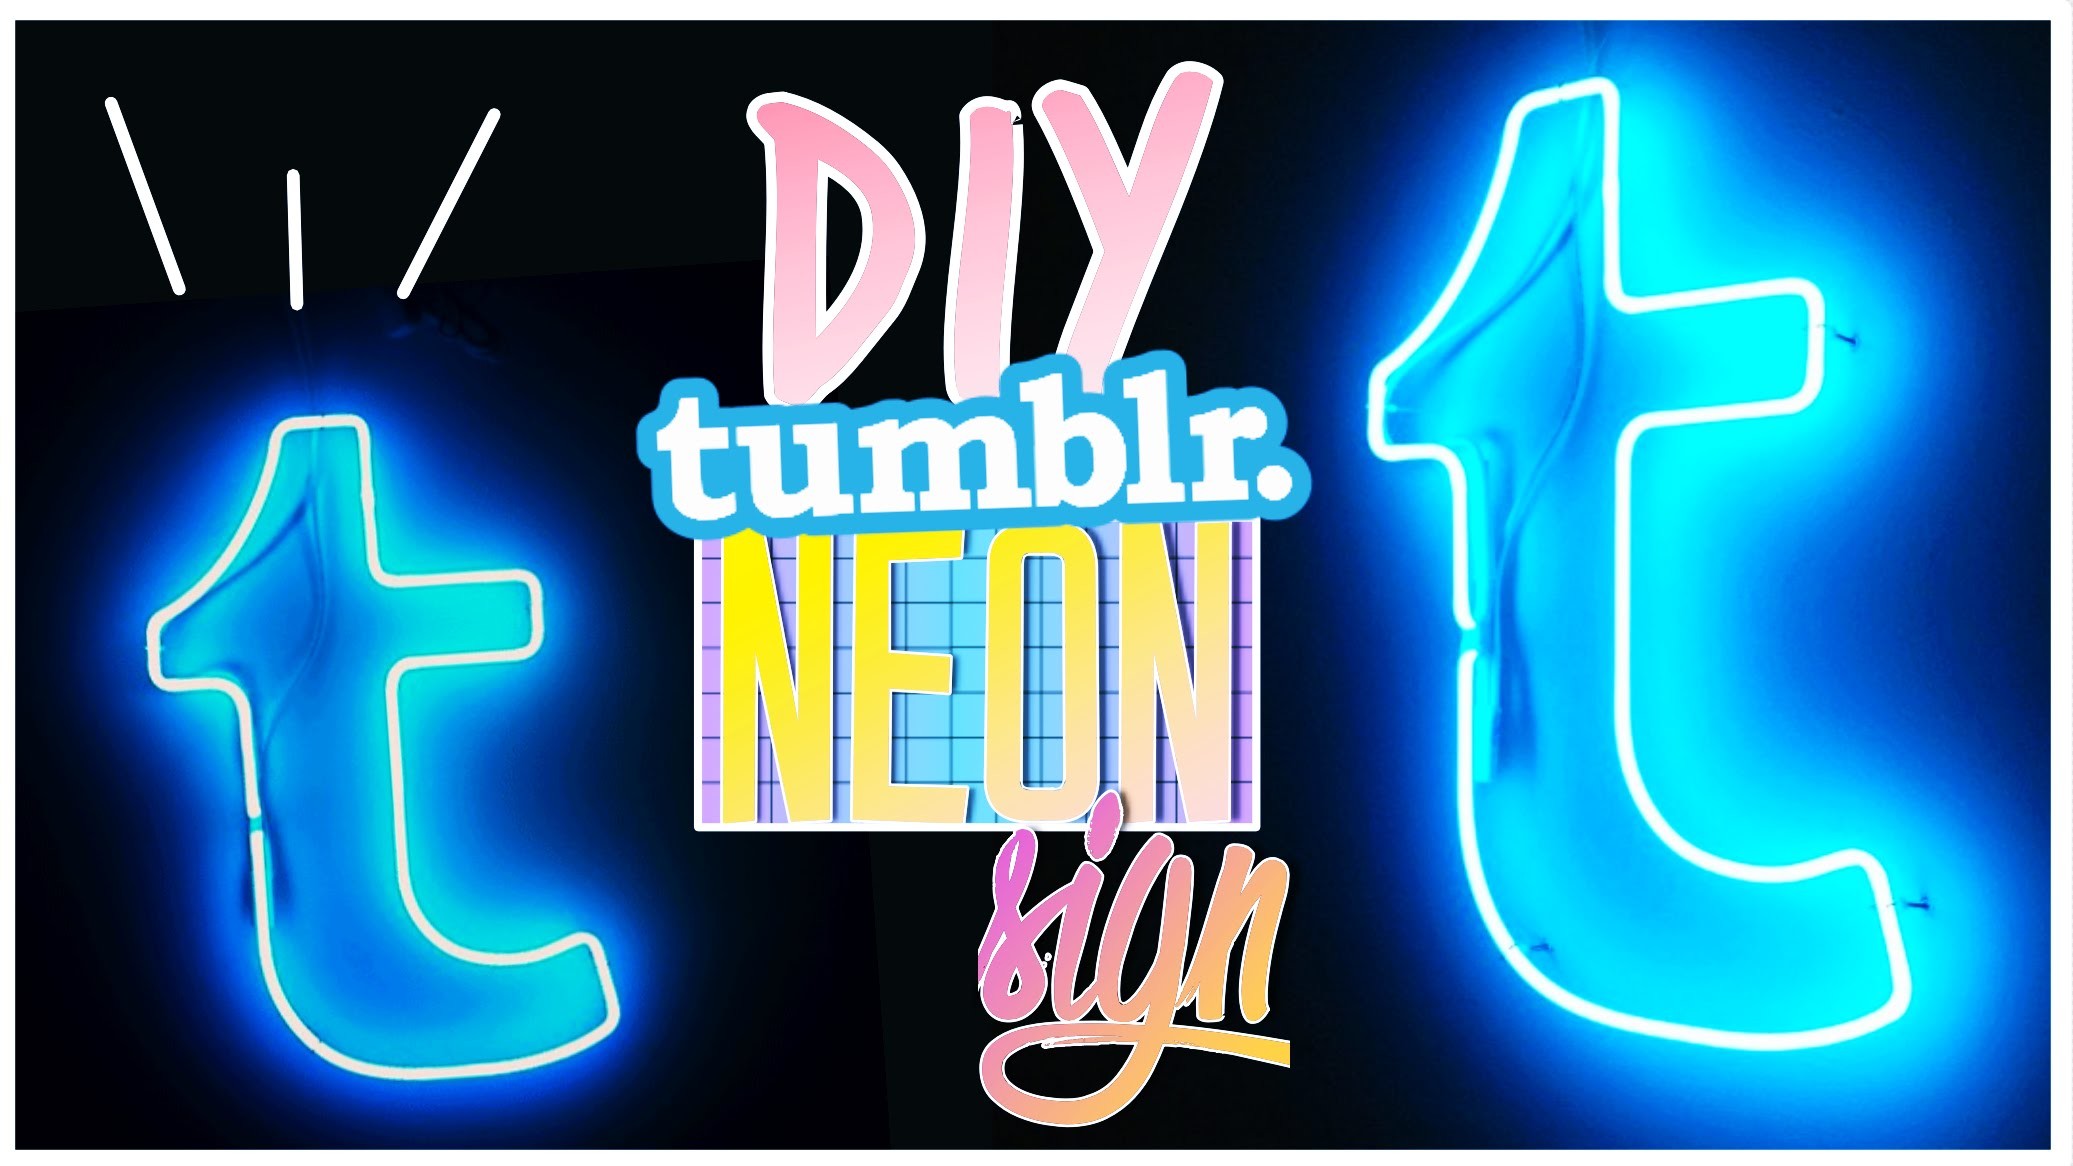 DIY tumblr NEON Light Sign! Neonlichter als Room Decor!